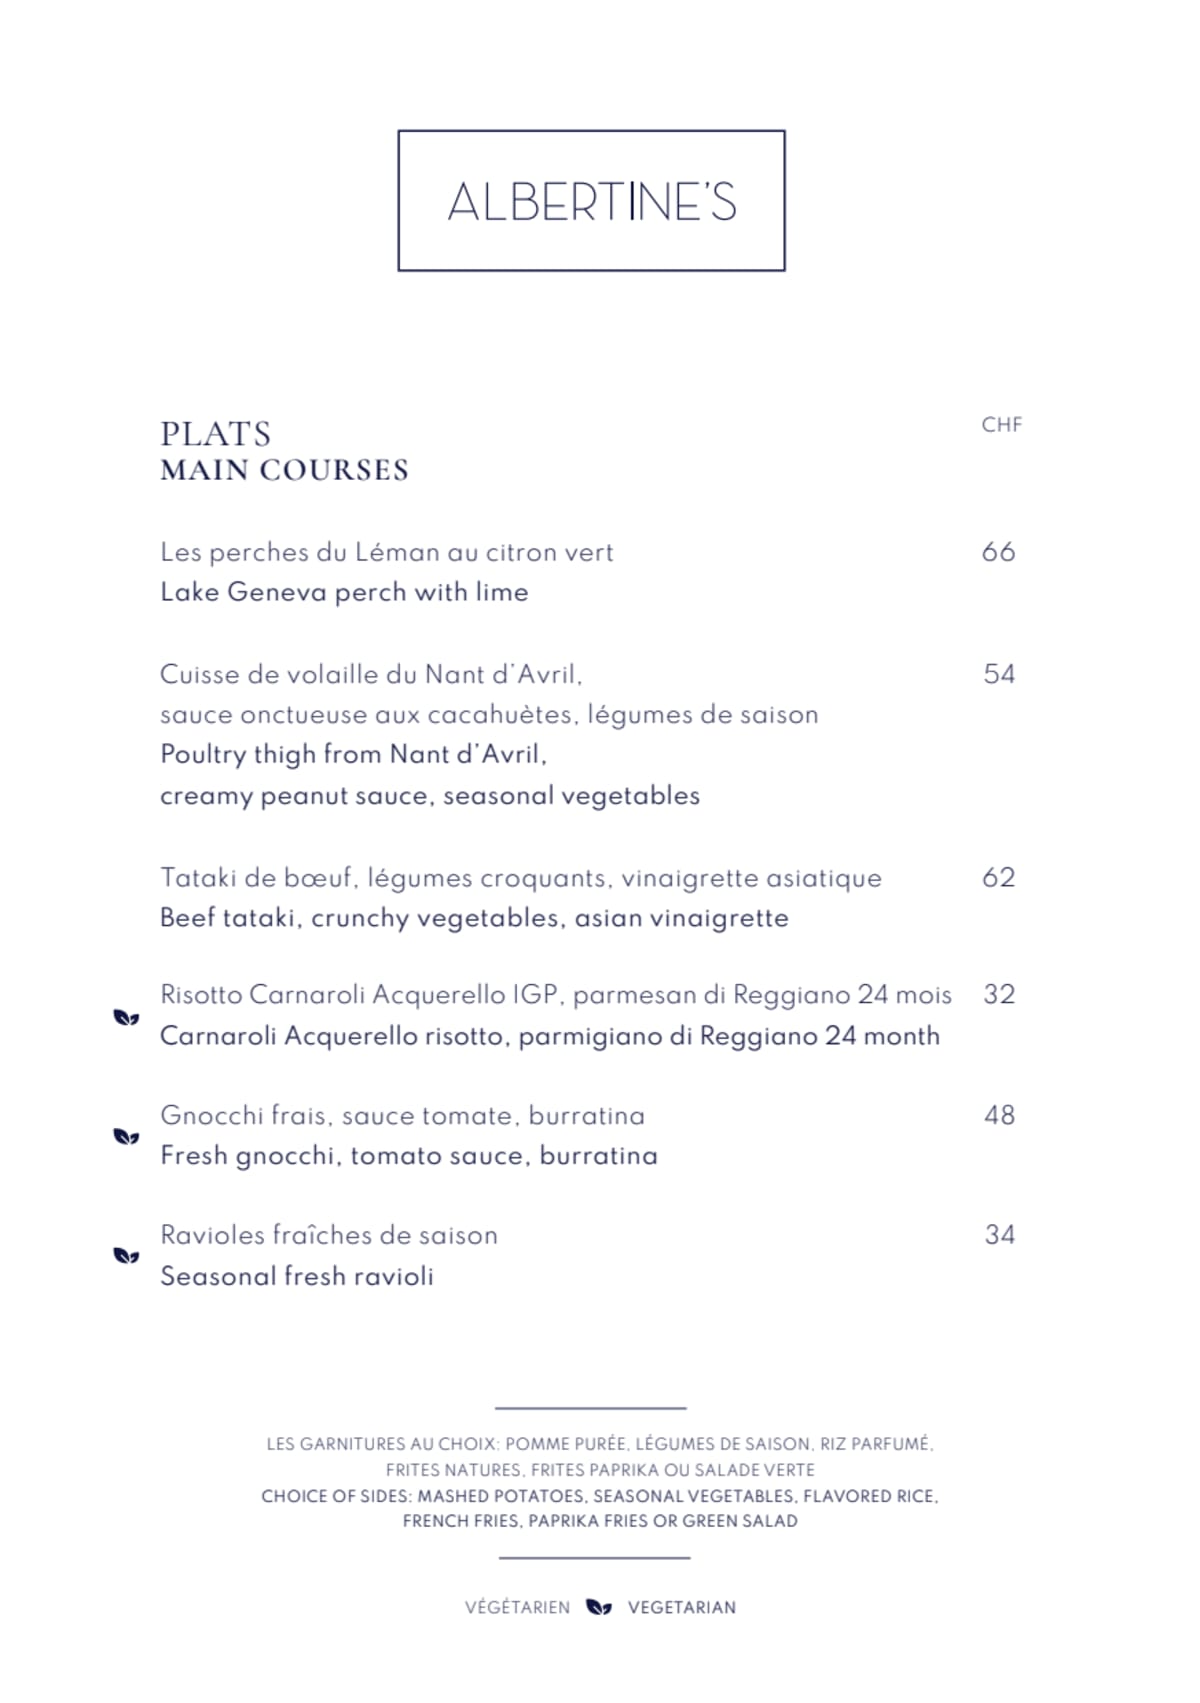 Albertine's - Beau-Rivage Genève menu